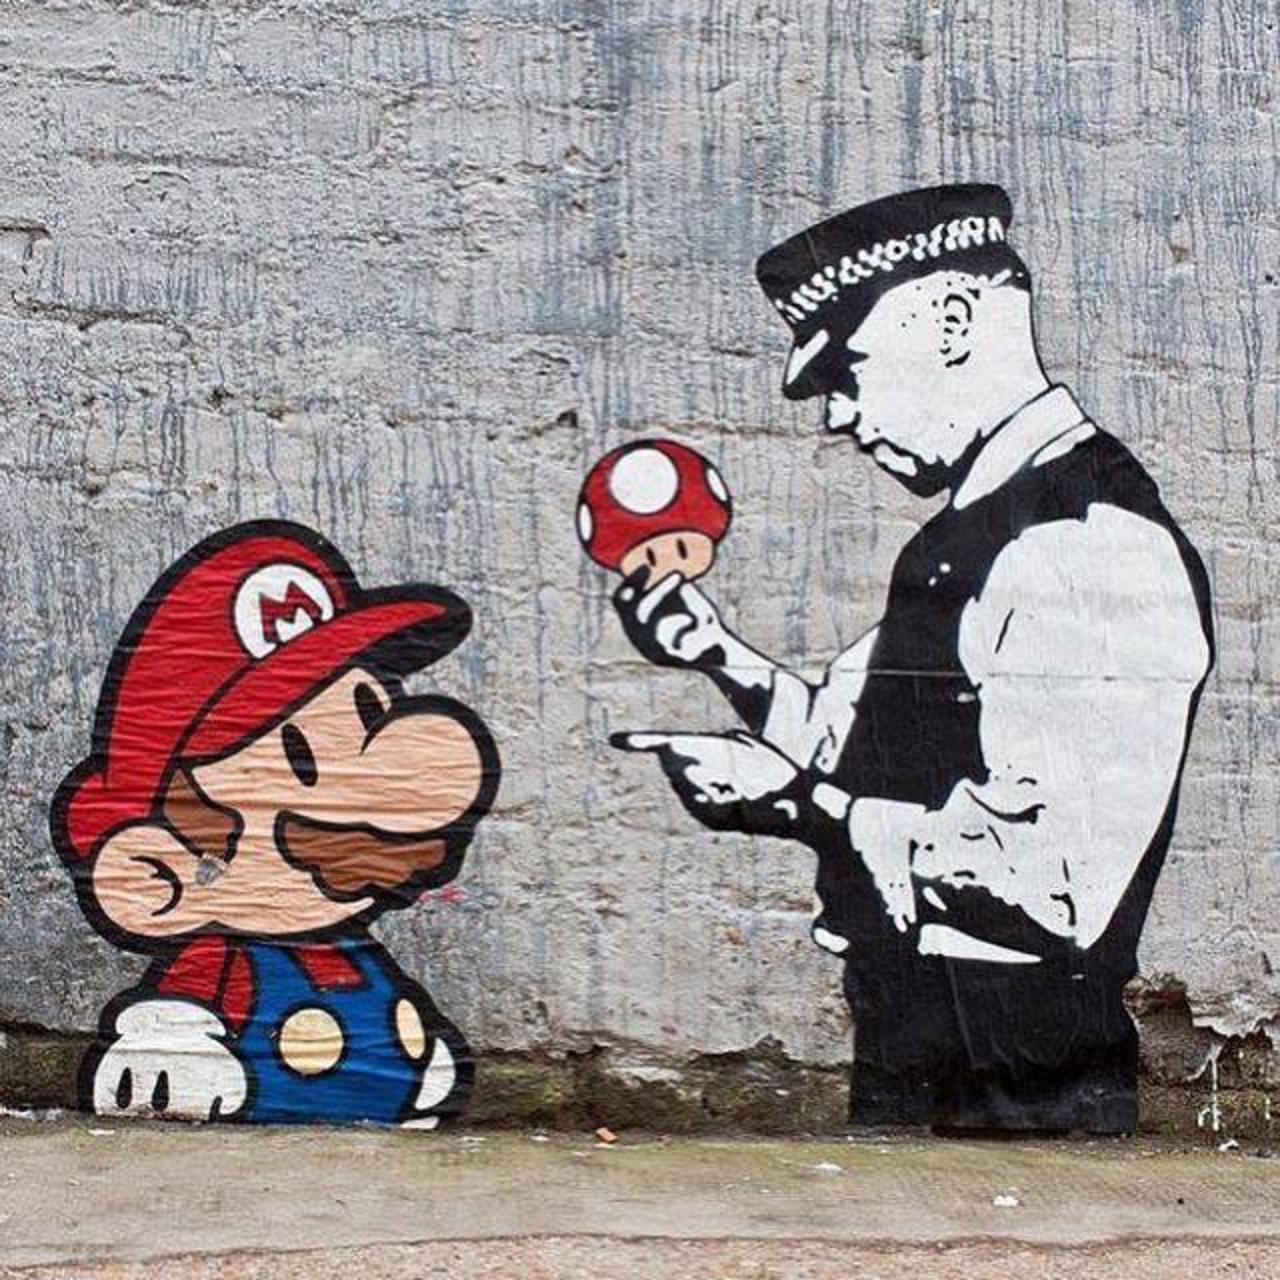 HeartJacking: #heartjacking Game over, Mario  trusticonstreetart #mario #streetart #mural #edm #art #graffiti #… http://t.co/FbsF5xEJFV……